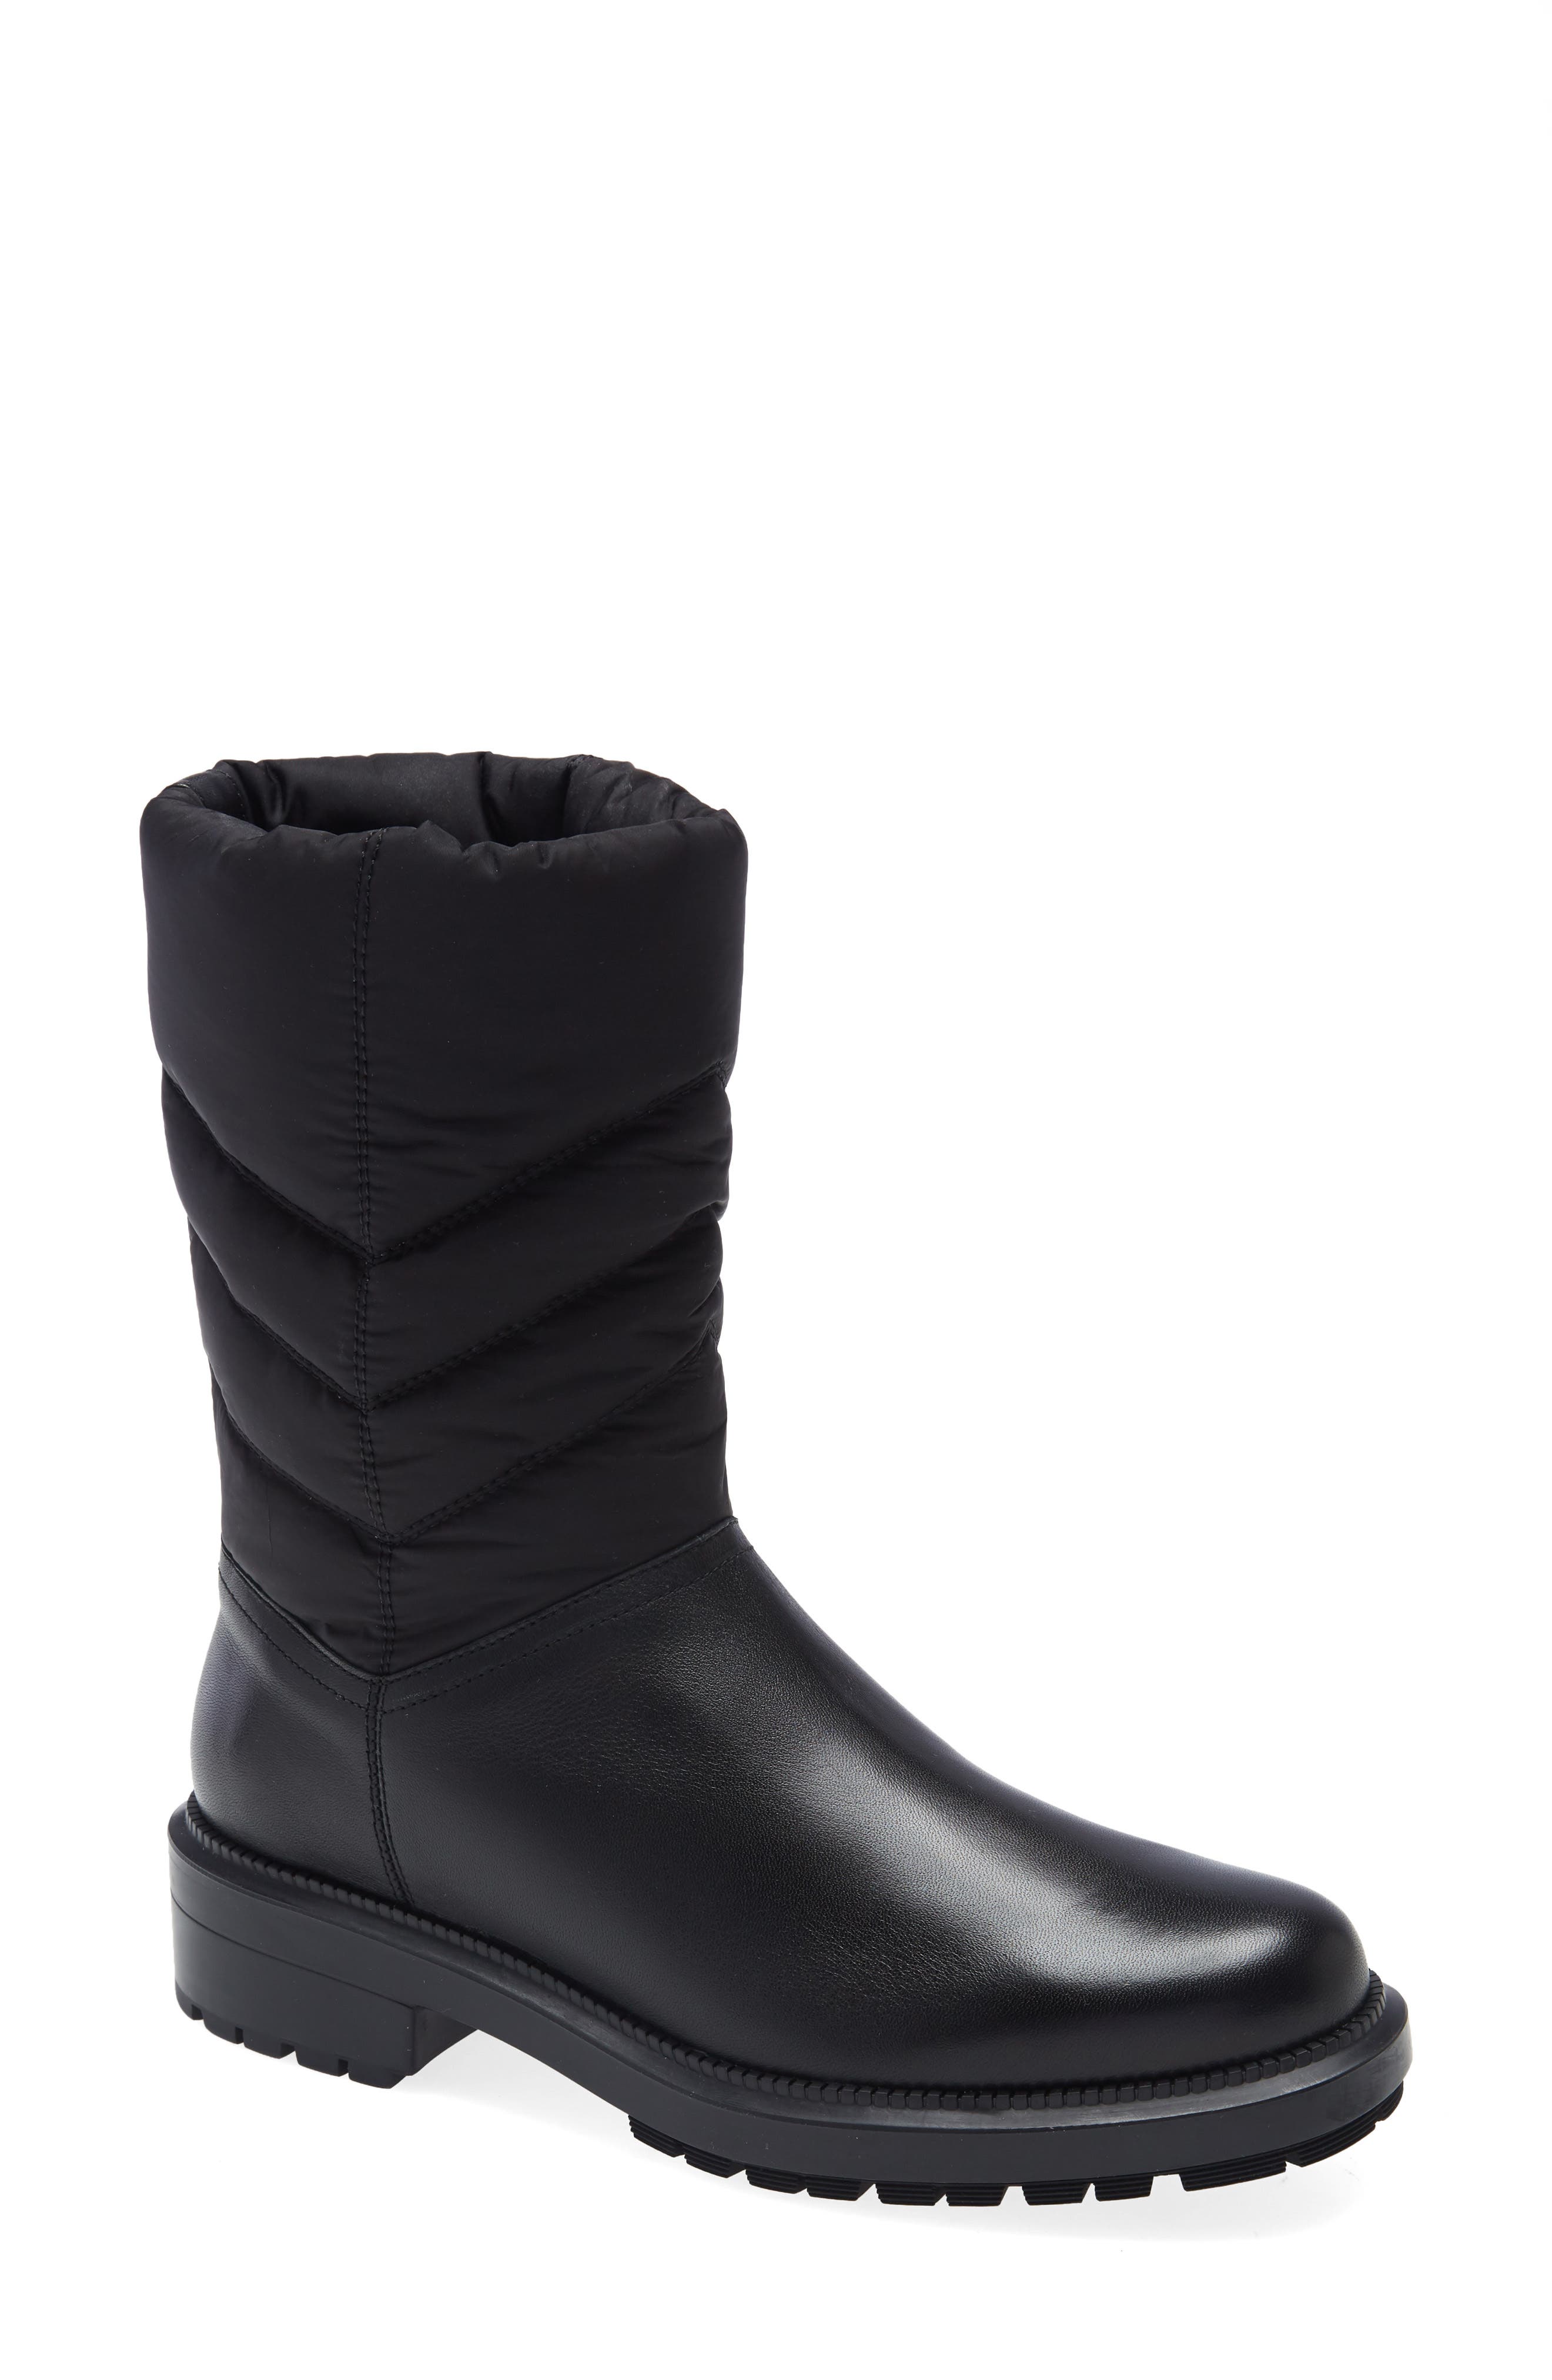 aquatalia winter boots waterproof